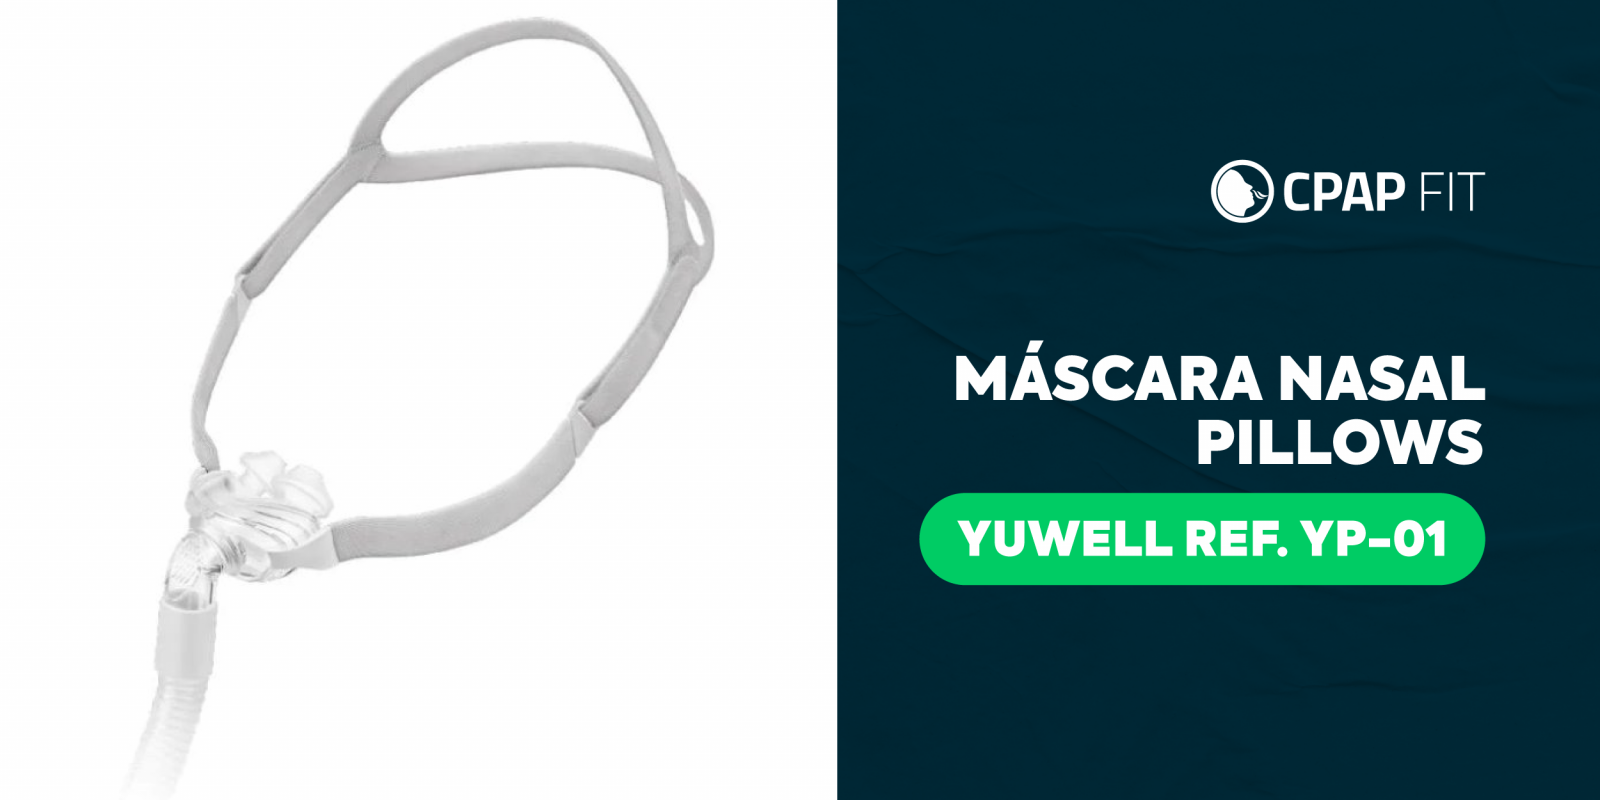 Mascara Nasal Pillows - Yuwell Ref. YP-01